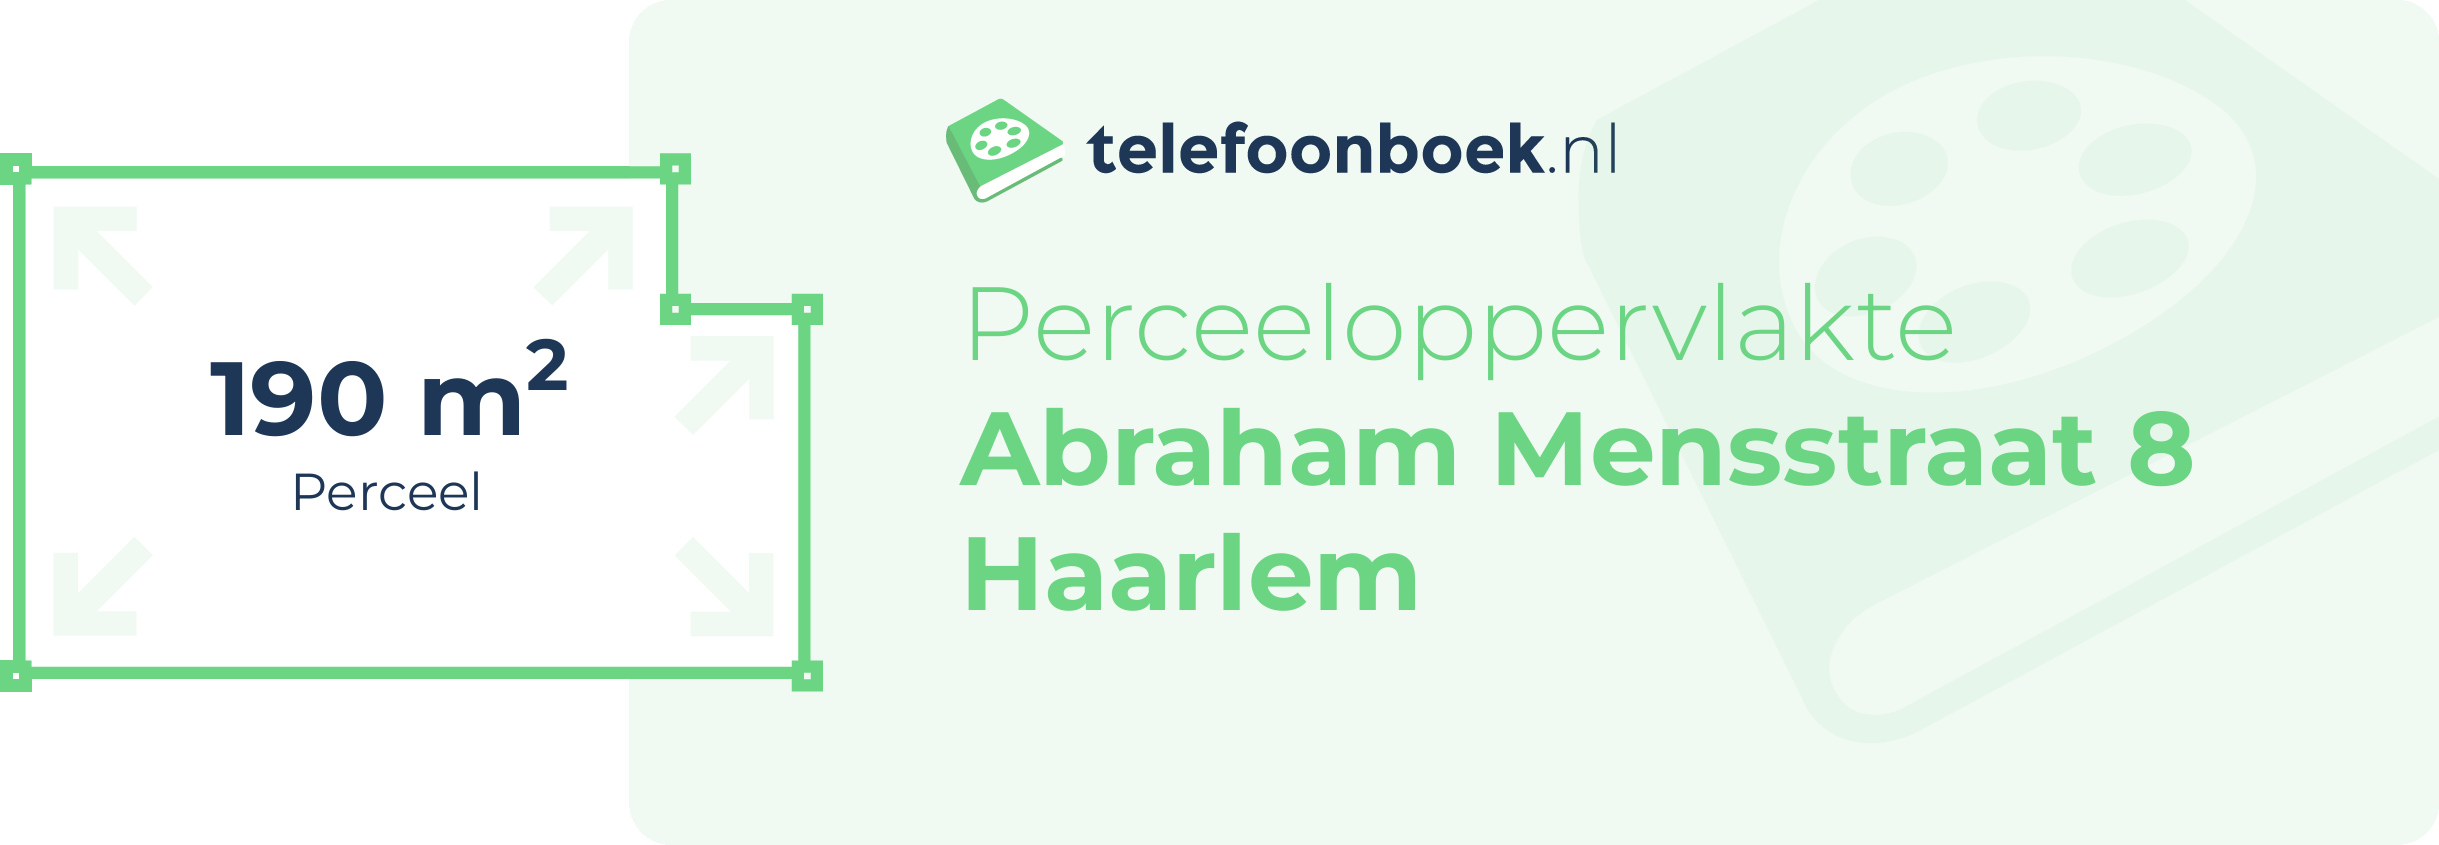 Perceeloppervlakte Abraham Mensstraat 8 Haarlem